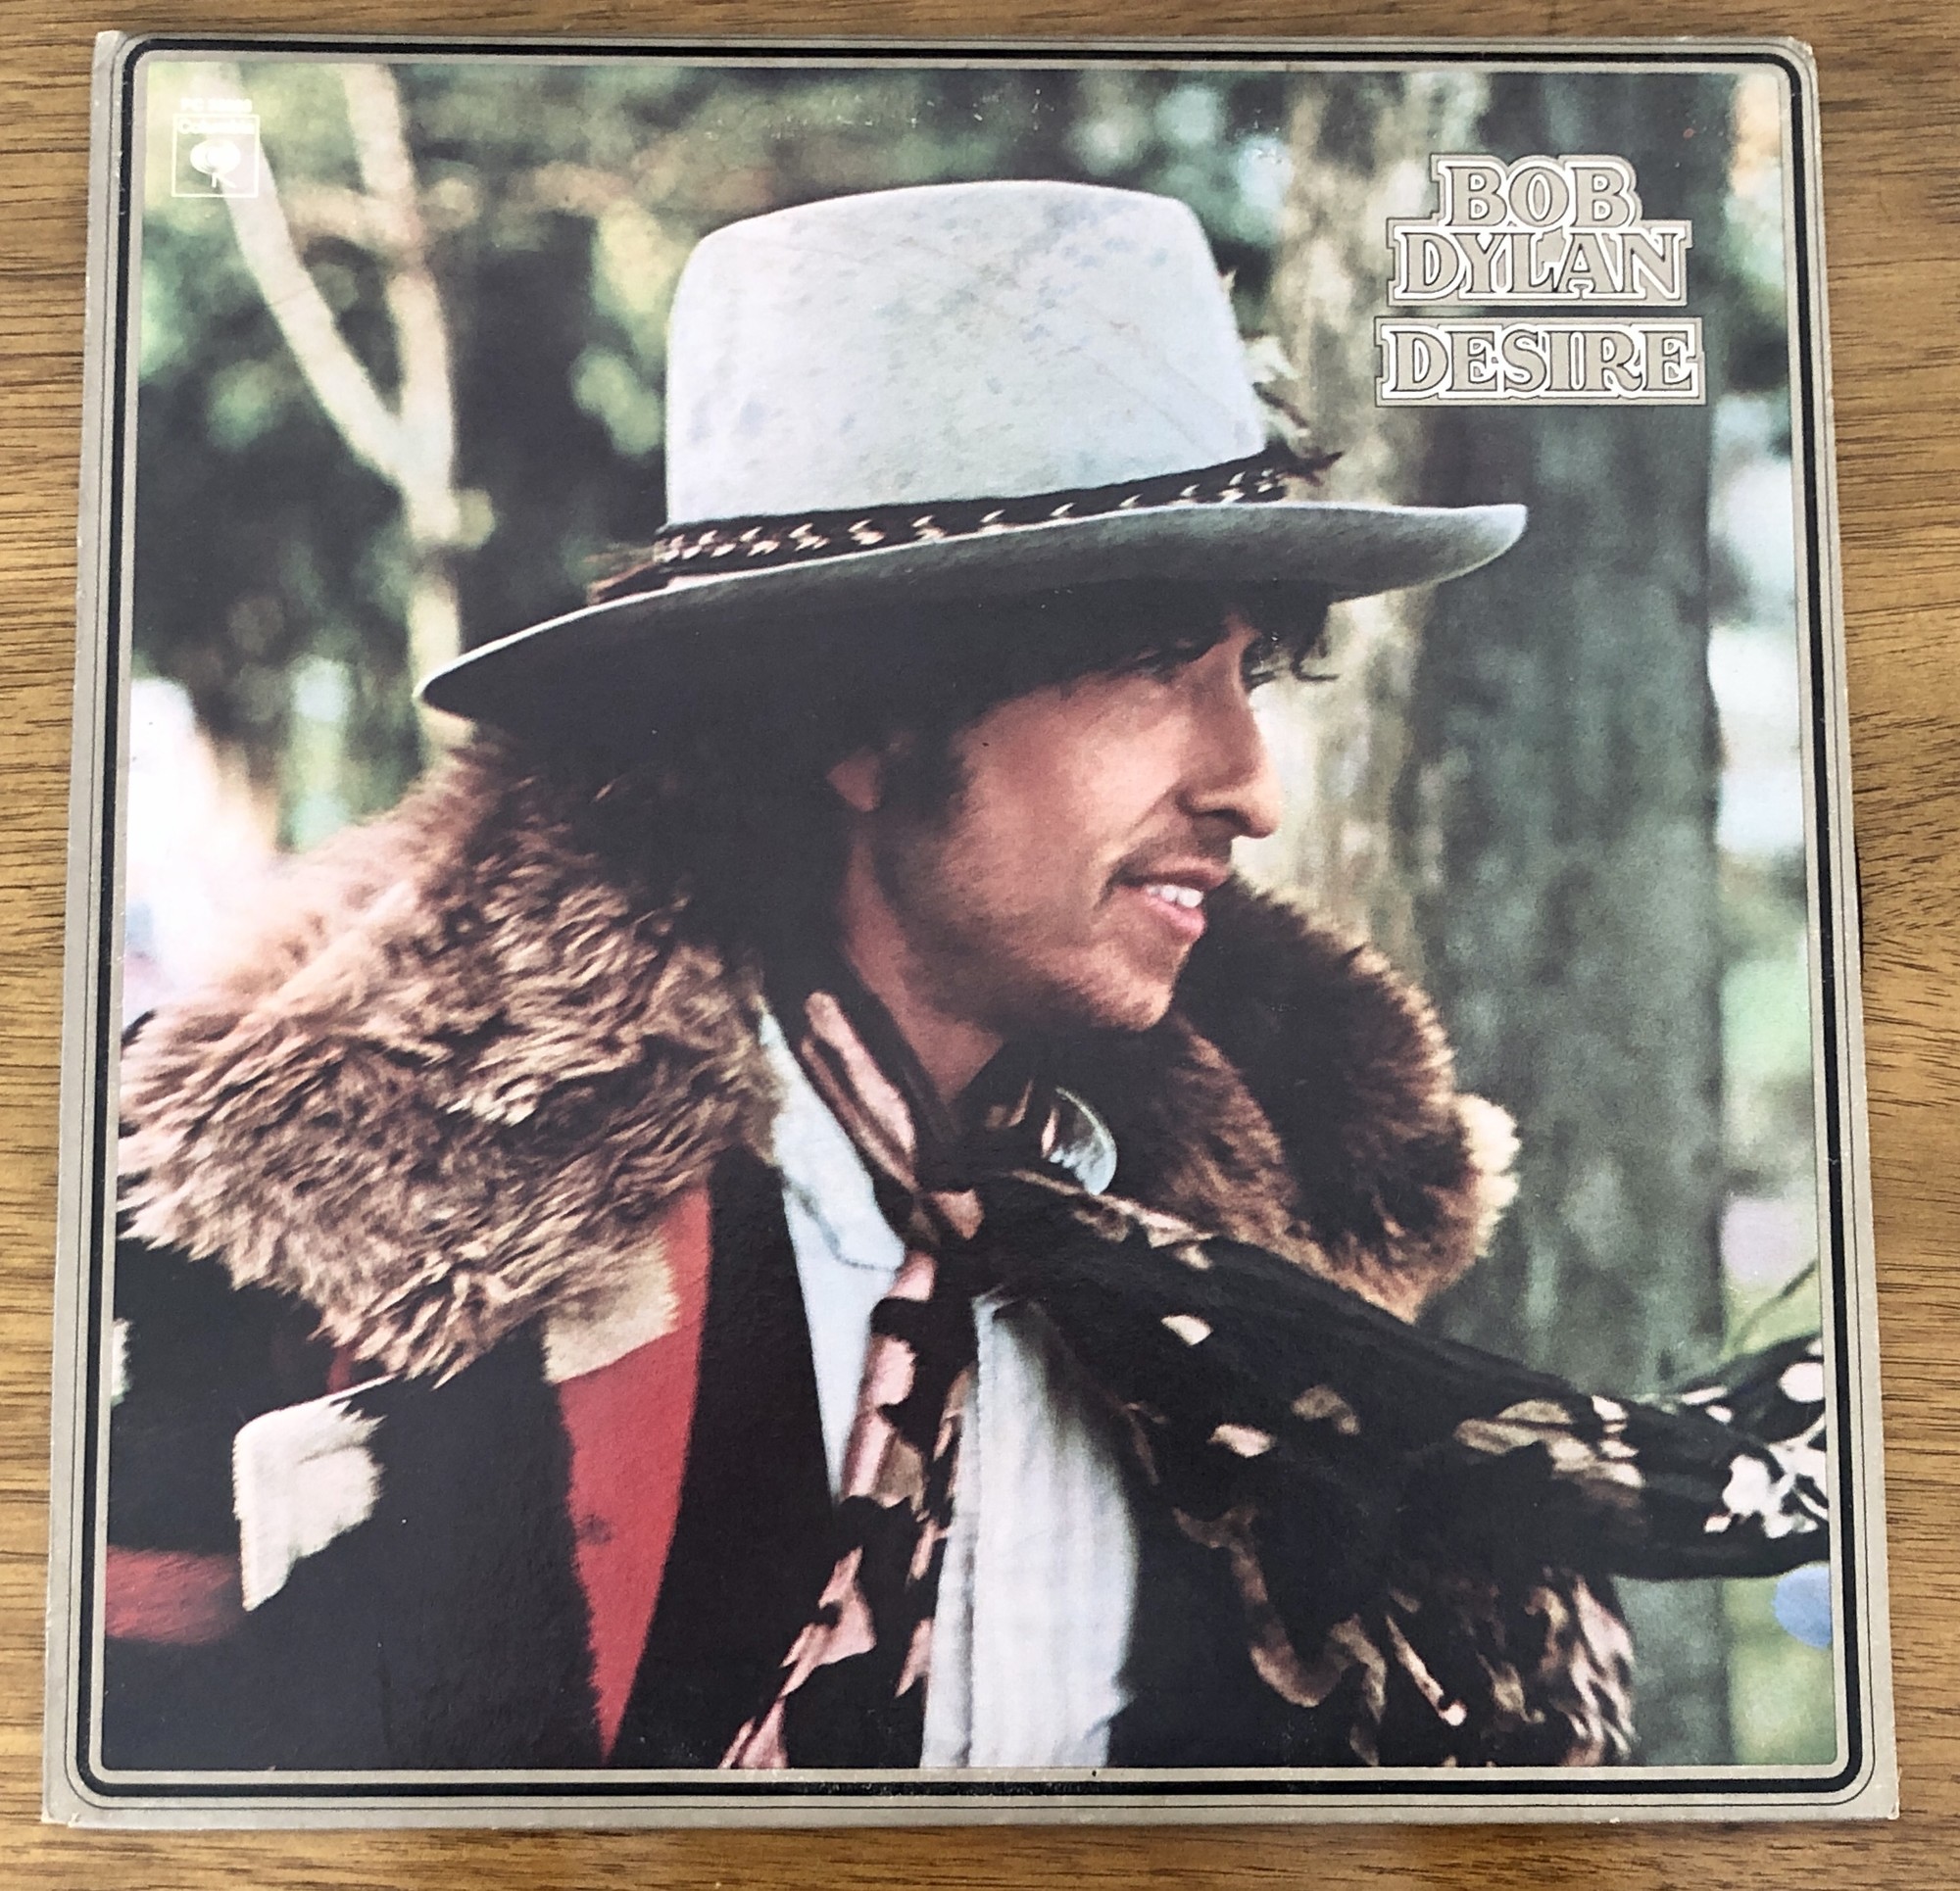 Bob Dylan Desire LP Vinyl Album c.1975. Album and cover in very good condition. Original cardboard sleeve.